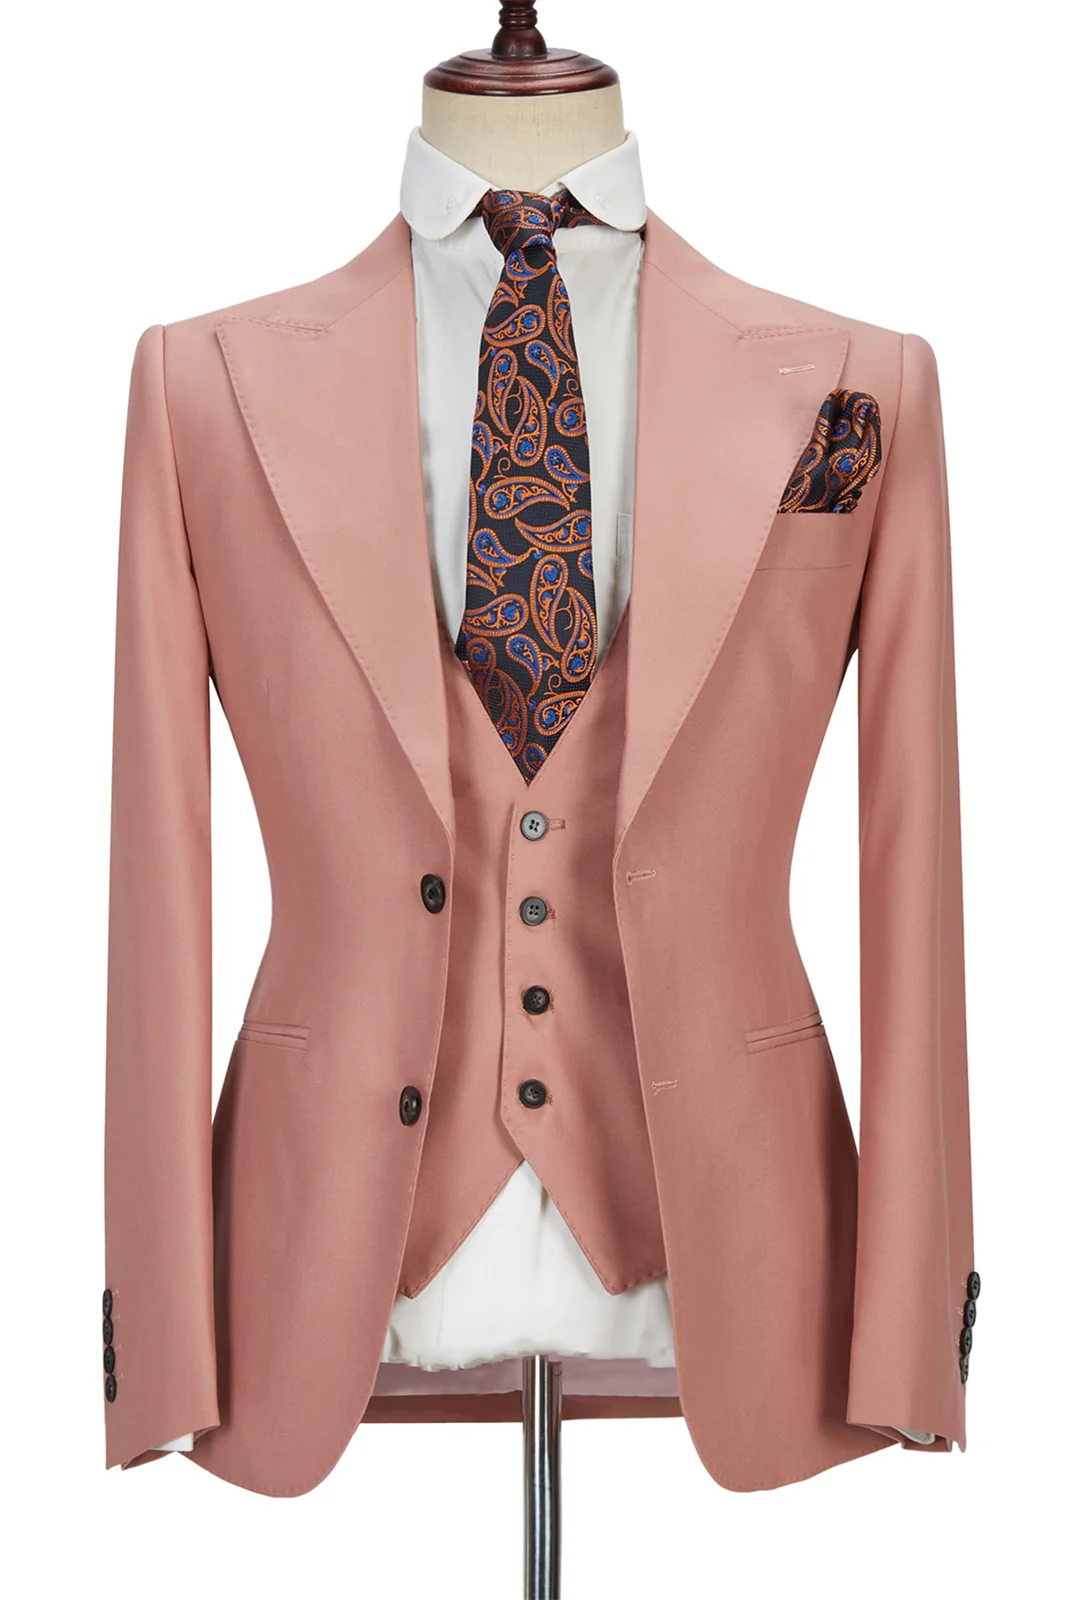 Daisda Pink 2 Buttons Marriage Suit For Men 3 Pieces With Peak Lapel 